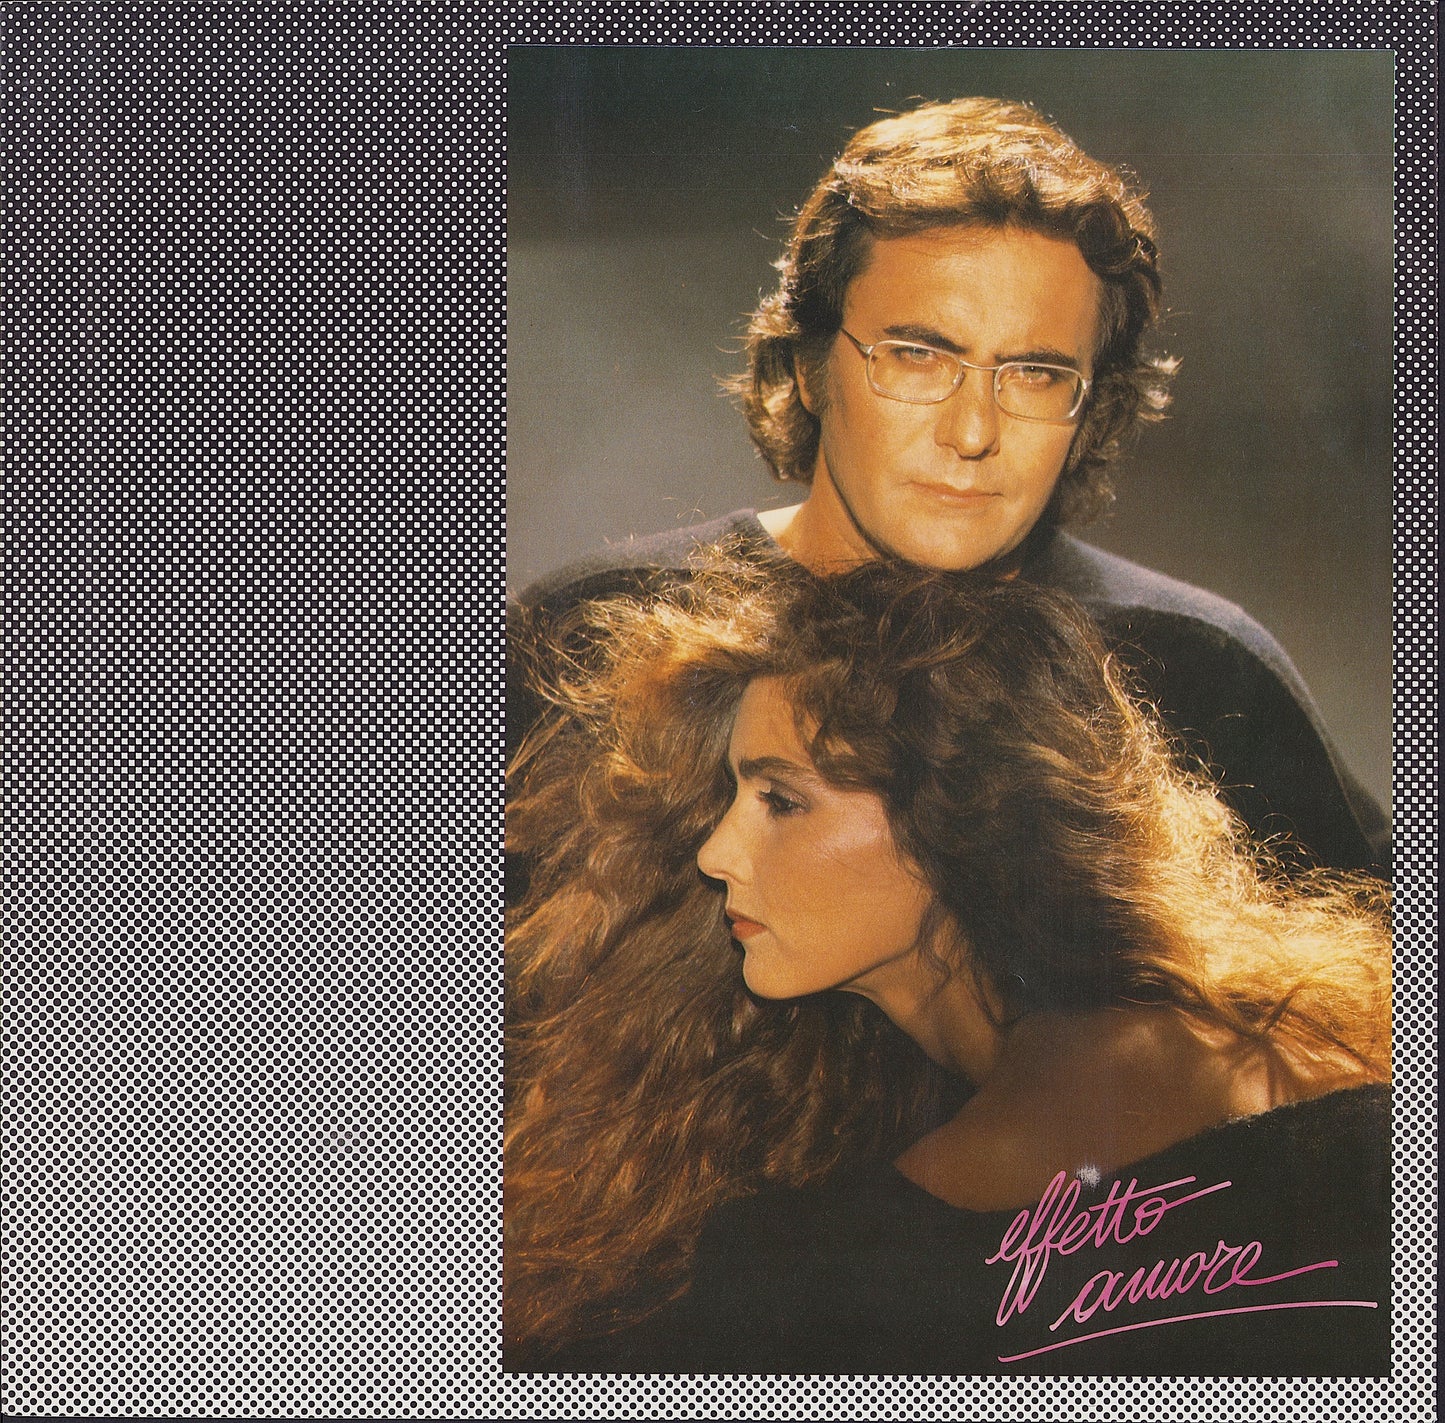 Al Bano & Romina Power - Effetto Amore Vinyl LP